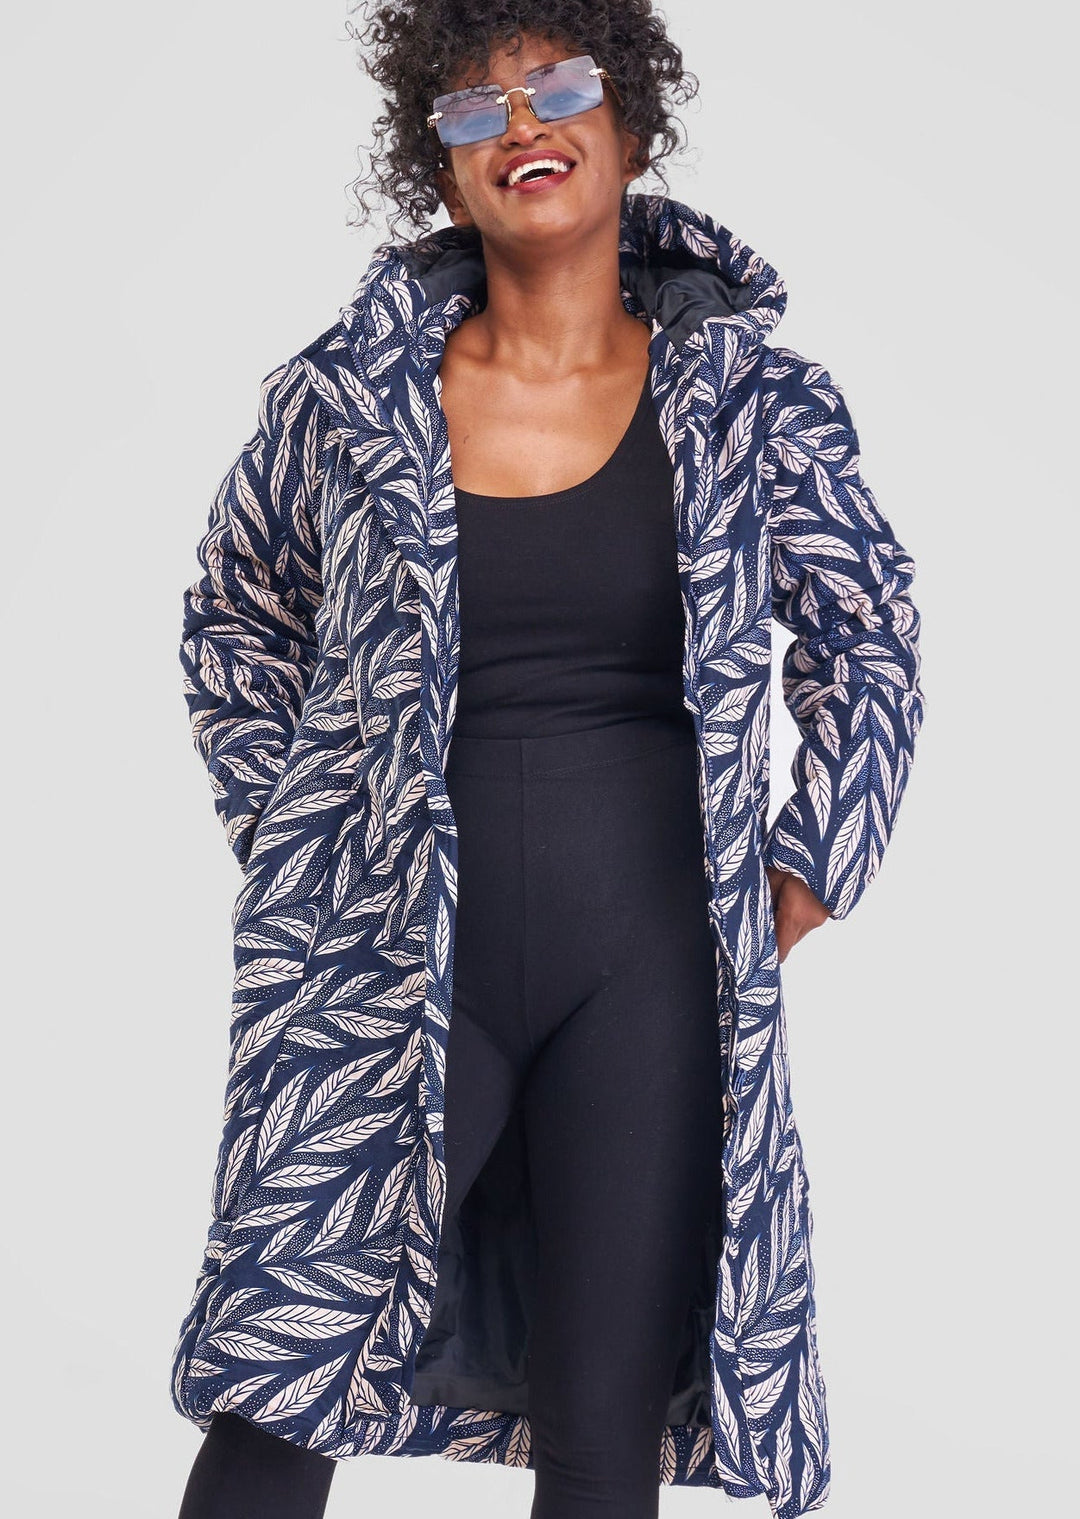 Wintermantel ‚Mwangaza‘ lang für 90 € - mikono.africa Jacken aus Kenia bunte Bomberjacke Partyjacke faire sozial nachhaltig designed in Kenia